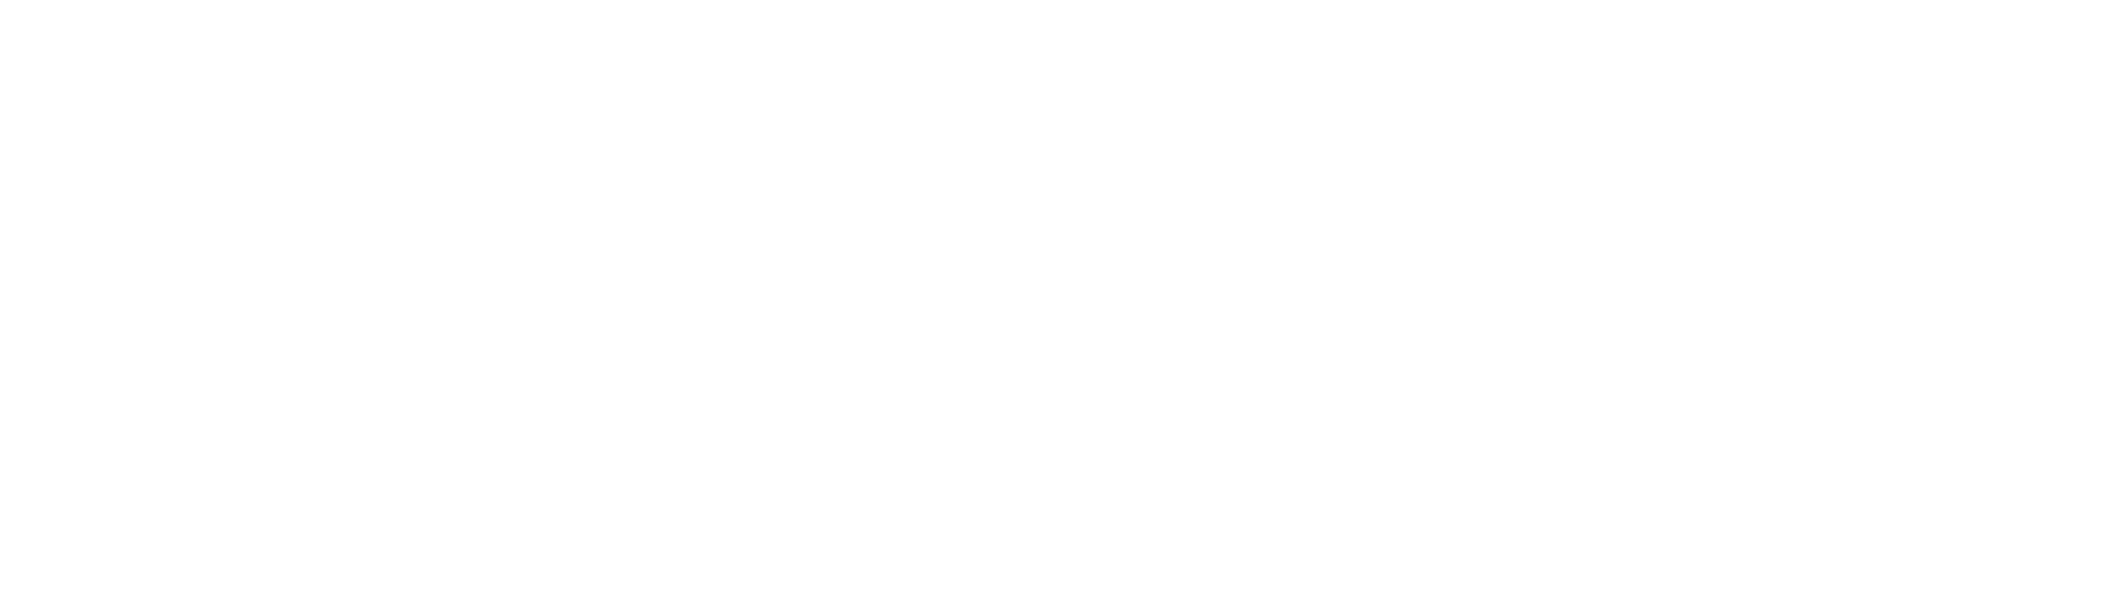 Lantech | Region 2